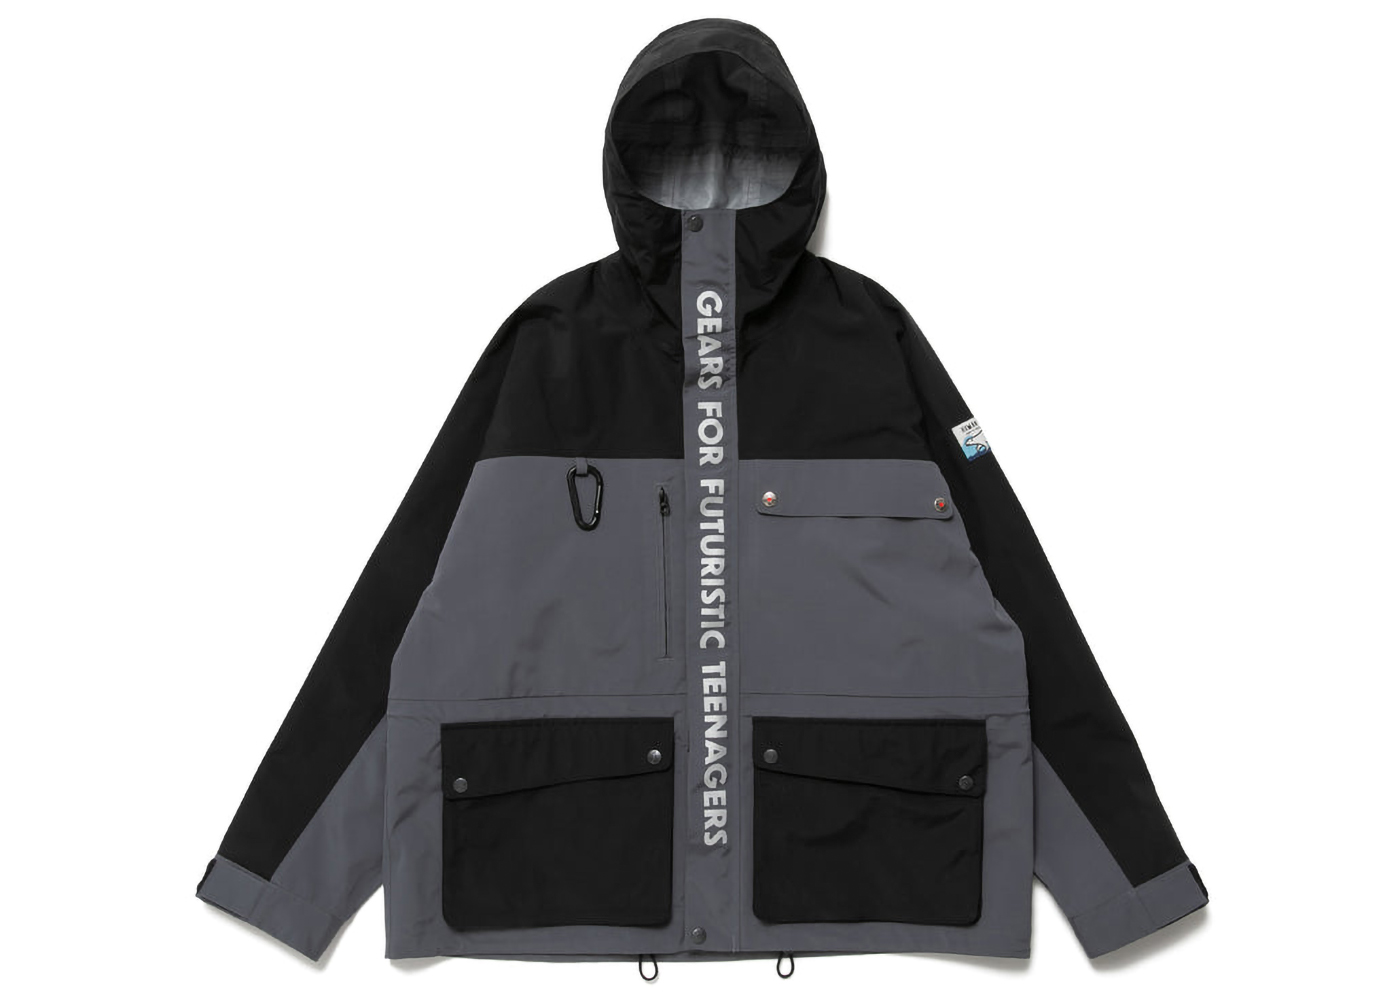 Human Made 3-Layer Shell Jacket Black Men's - FW22 - US